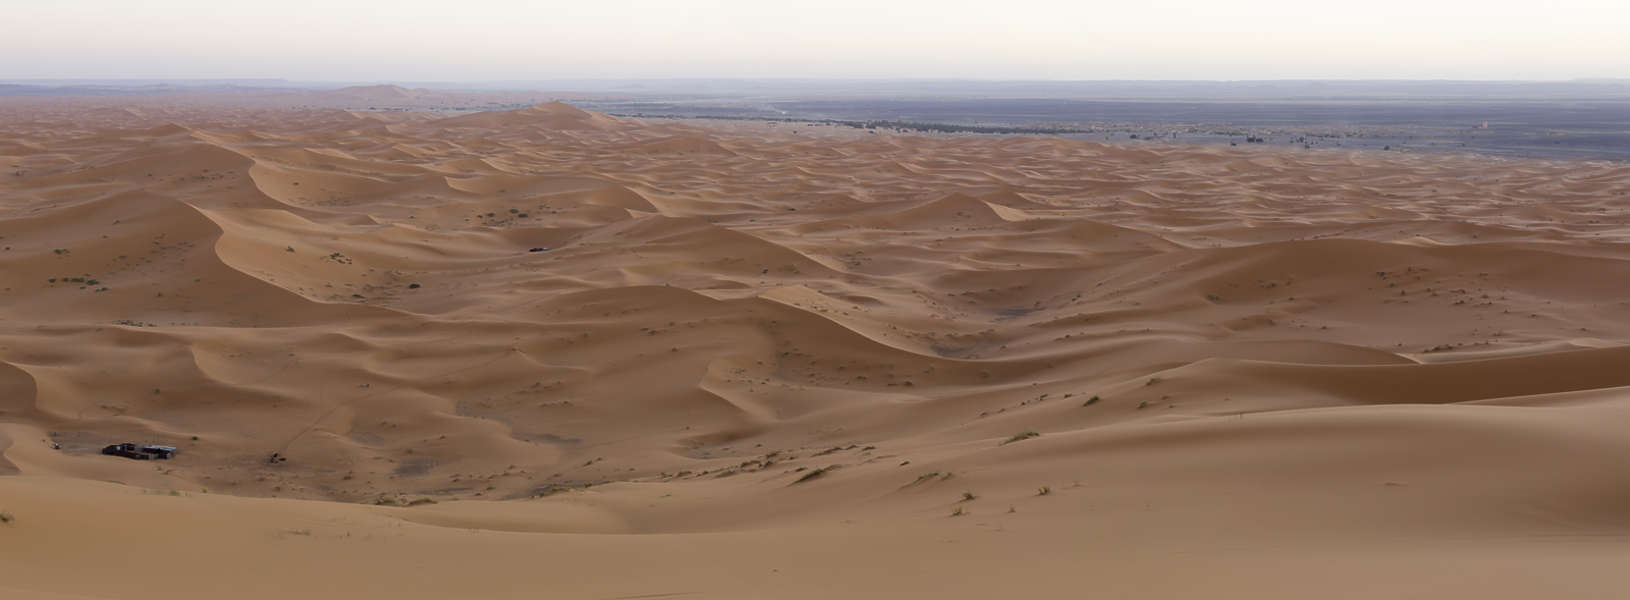 LandscapeDesert0039 - Free Background Texture - desert landscape dunes morocco africa